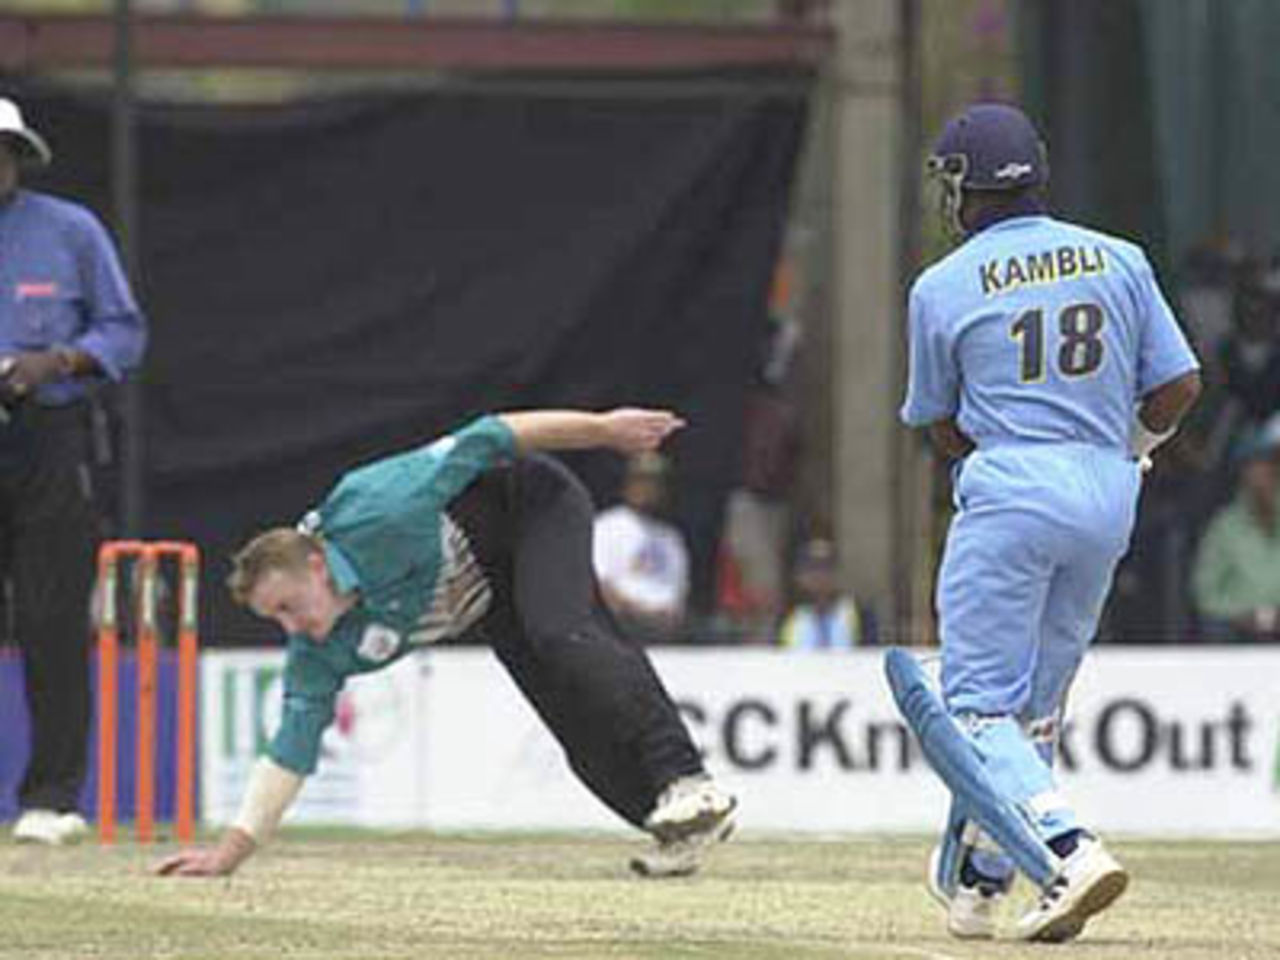 Kambli drives the ball past the bowler Styris for a boundary, ICC KnockOut, 2000/01, Final, India v New Zealand, Gymkhana Club Ground, Nairobi, 15 October 2000.